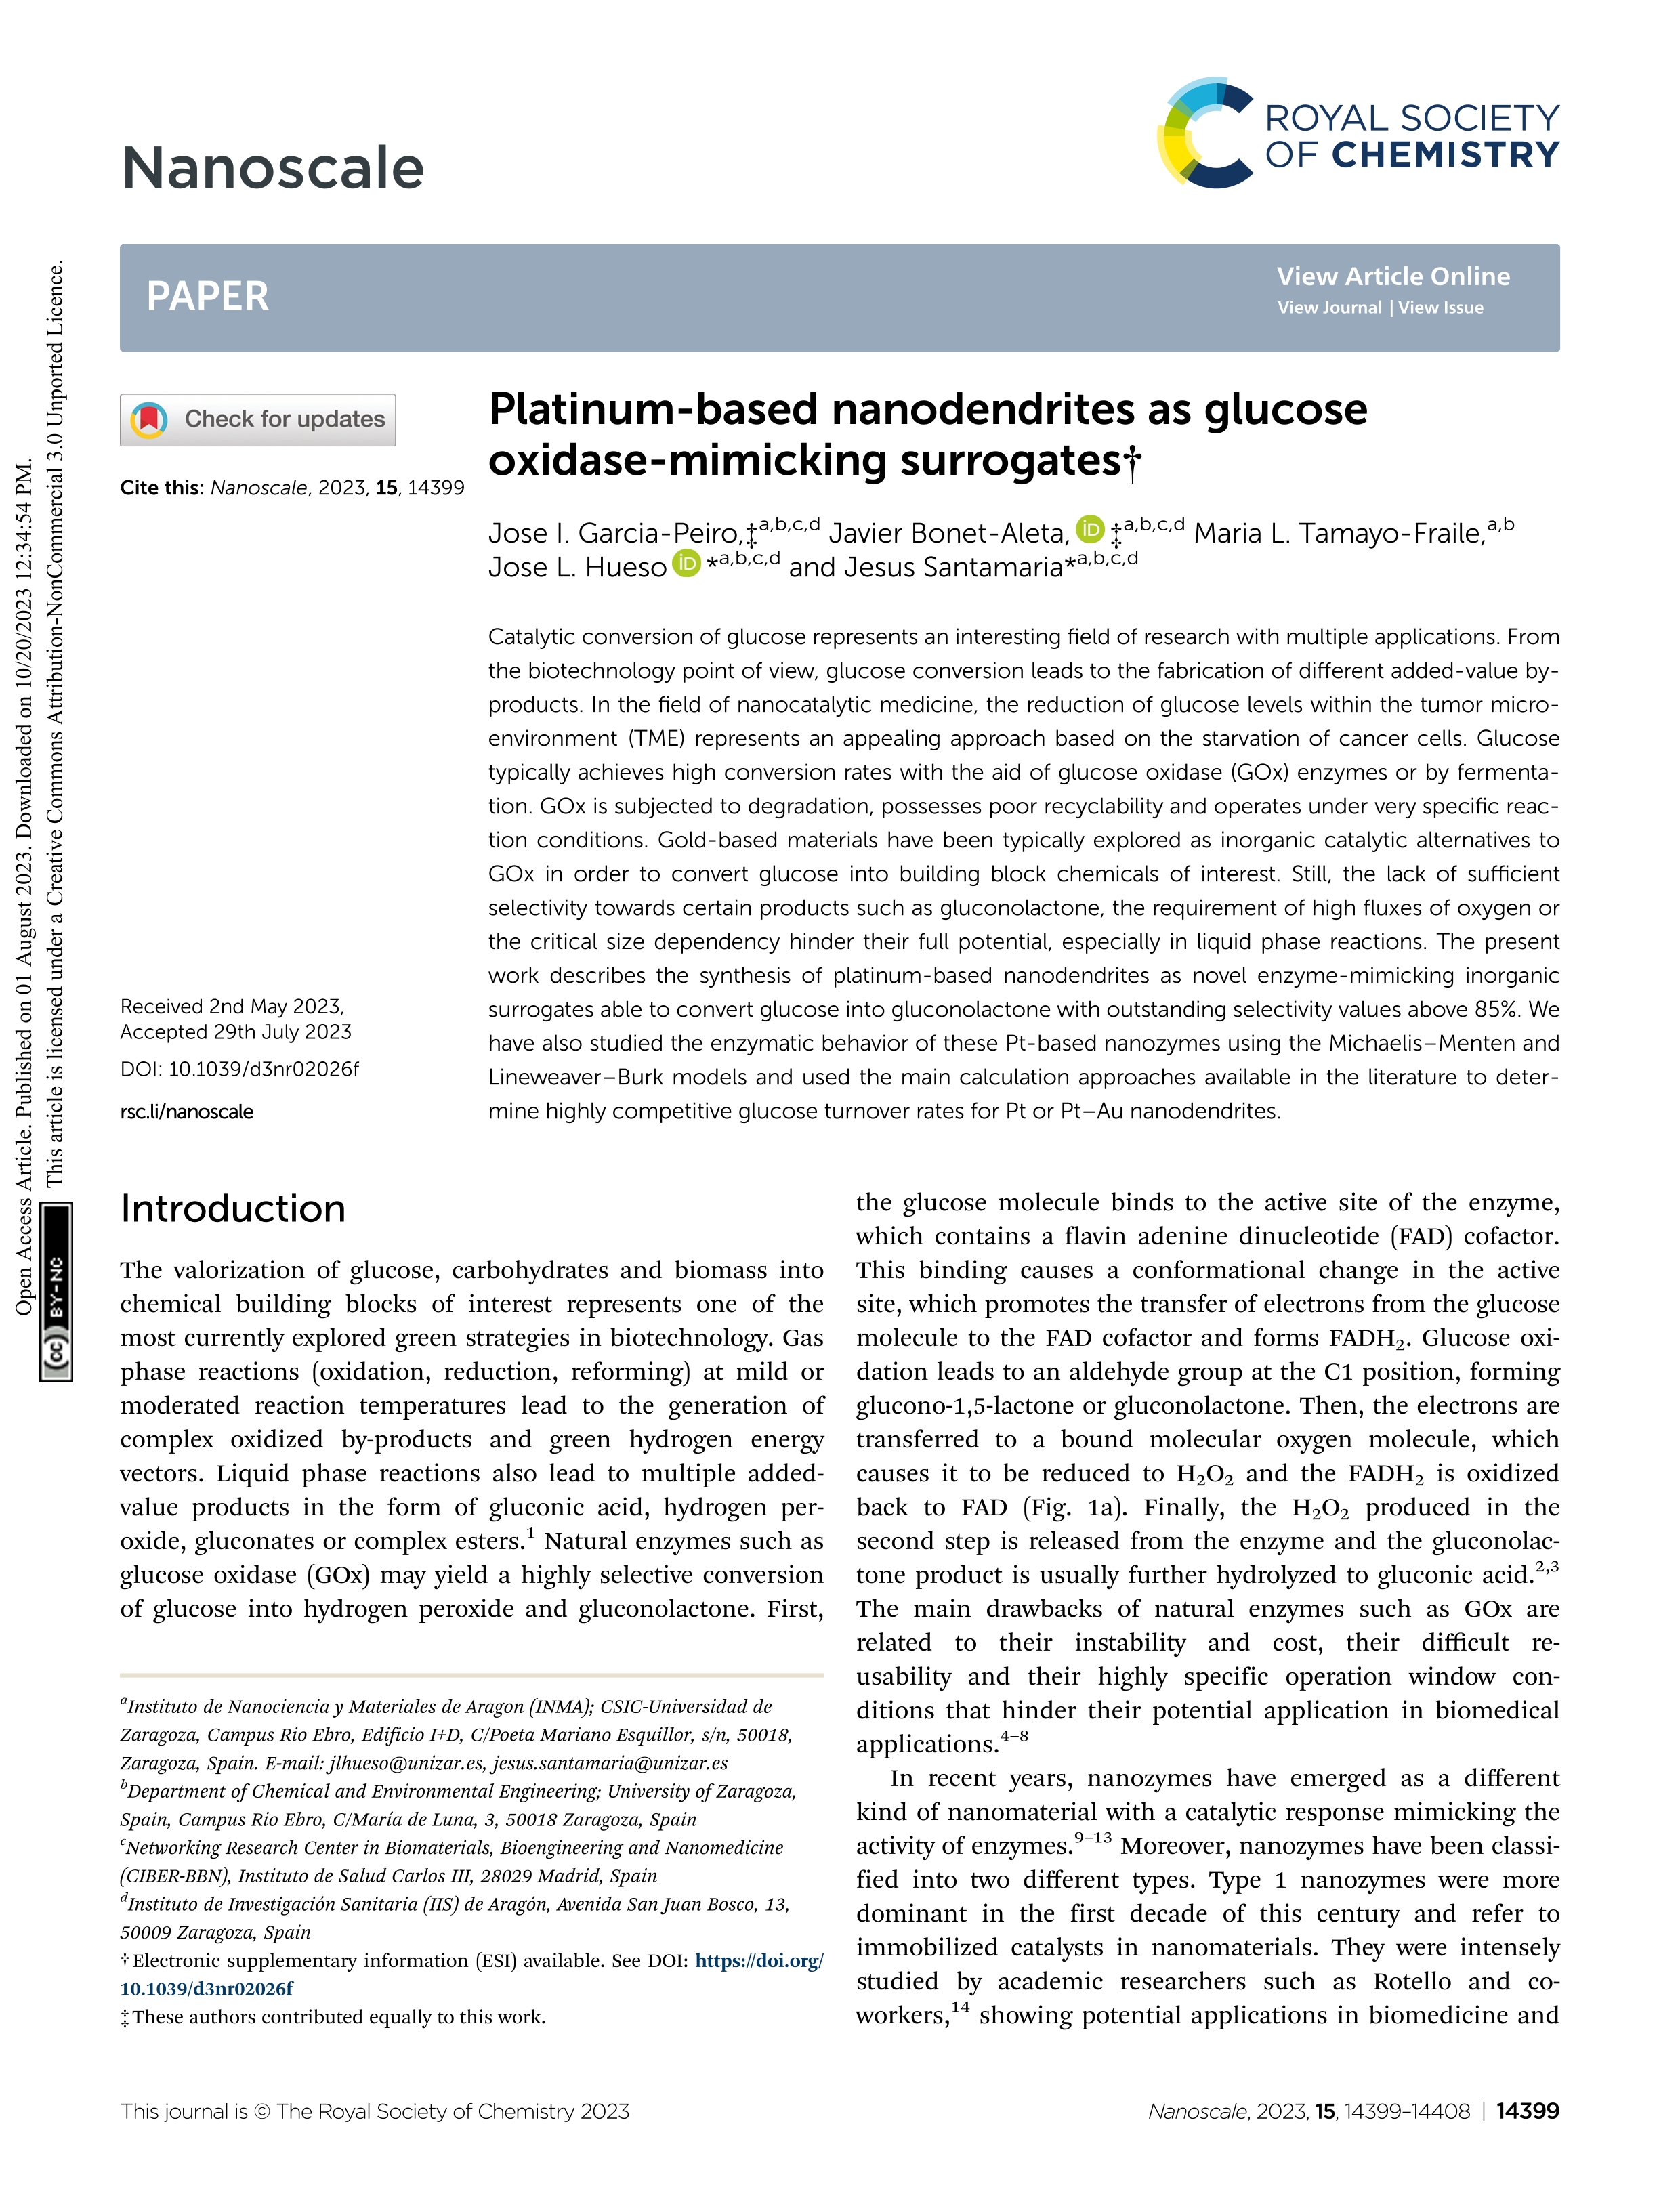 Platinum-based nanodendrites as glucose oxidase-mimicking surrogates